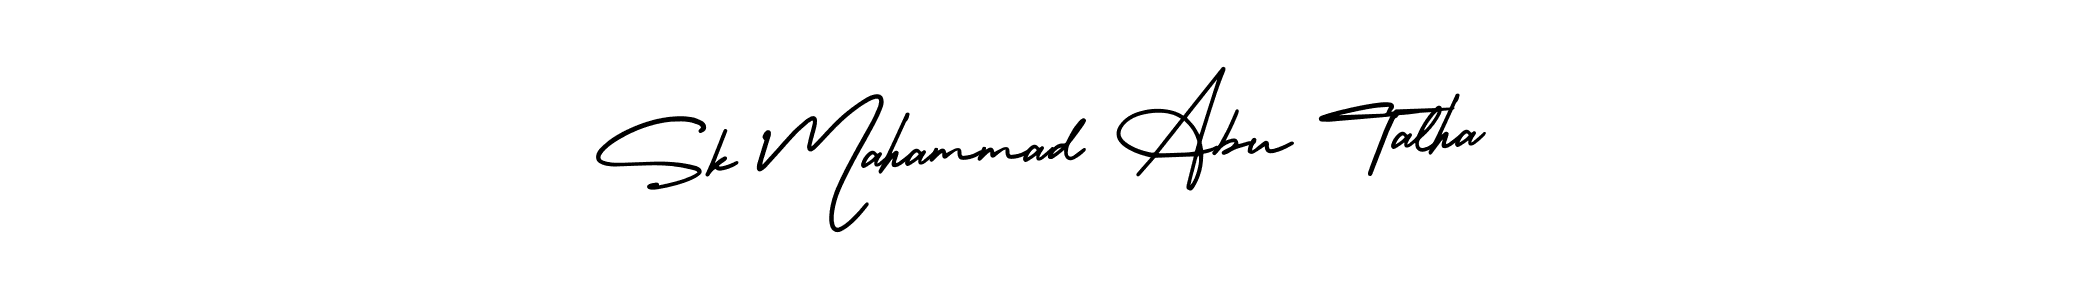 Best and Professional Signature Style for Sk Mahammad Abu Talha. AmerikaSignatureDemo-Regular Best Signature Style Collection. Sk Mahammad Abu Talha signature style 3 images and pictures png